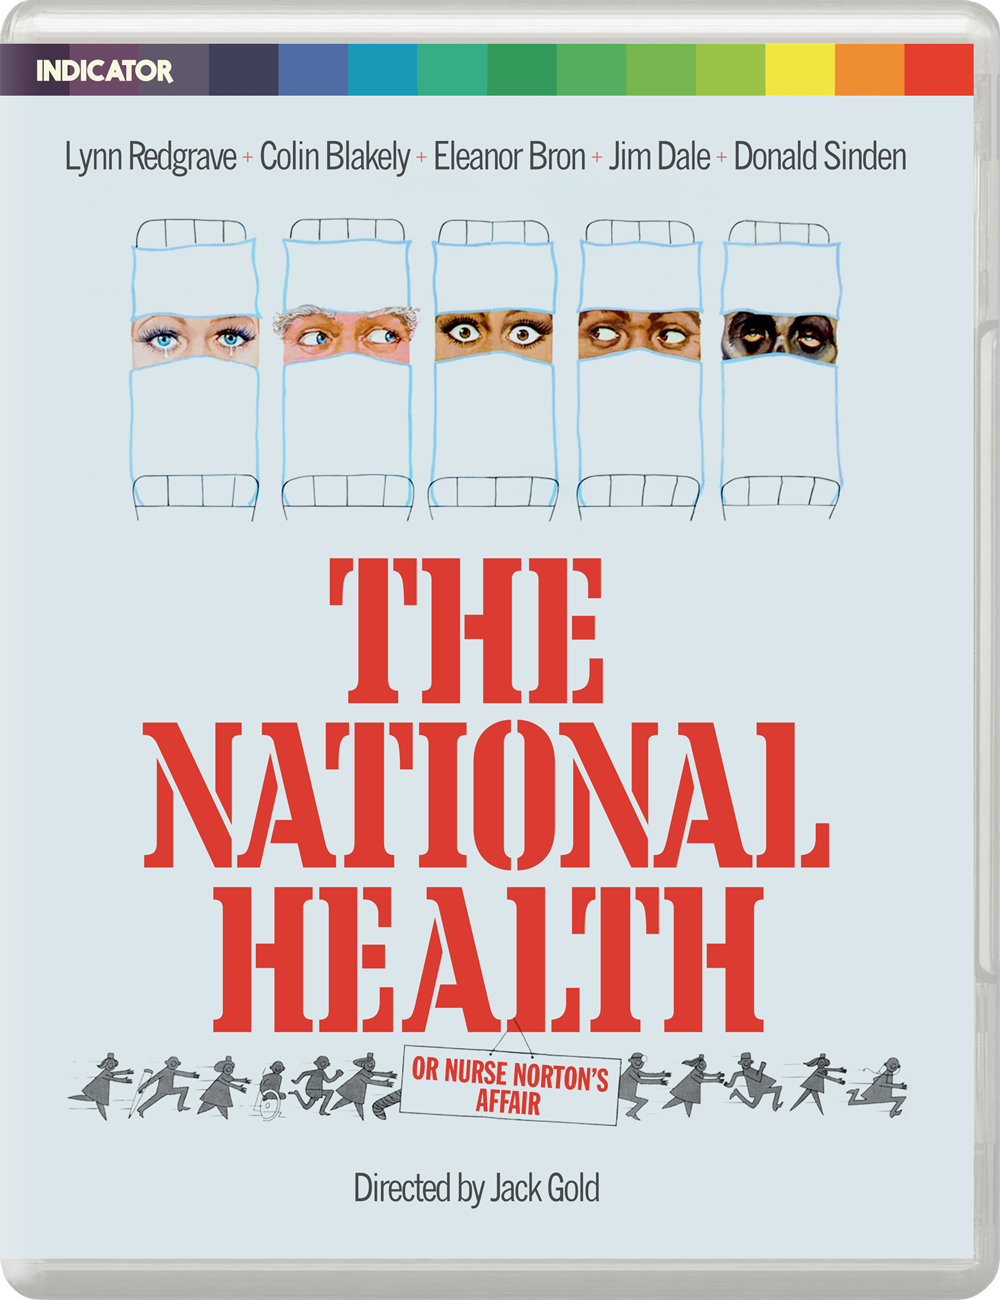 THE NATIONAL HEALTH - LE